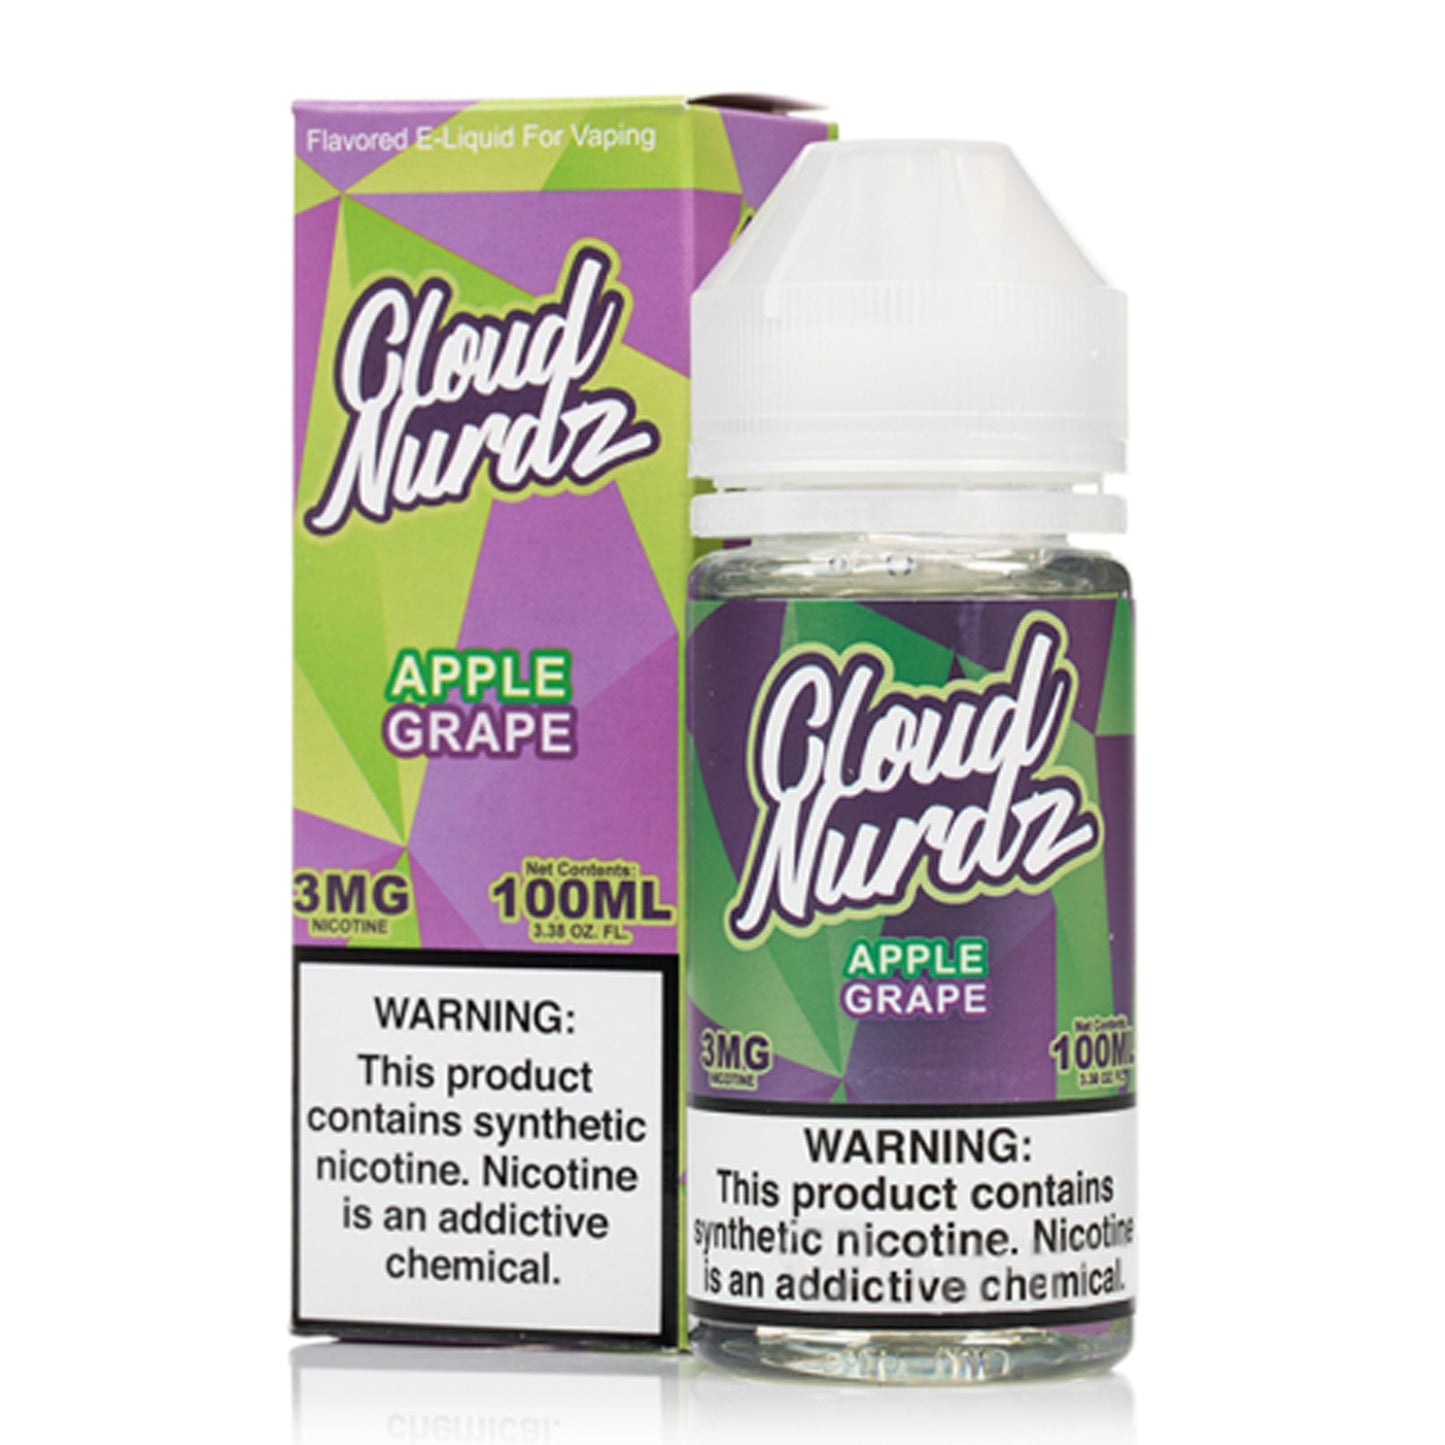 Cloud Nurdz 100ML - Apple Grape - Mobs Enterprise